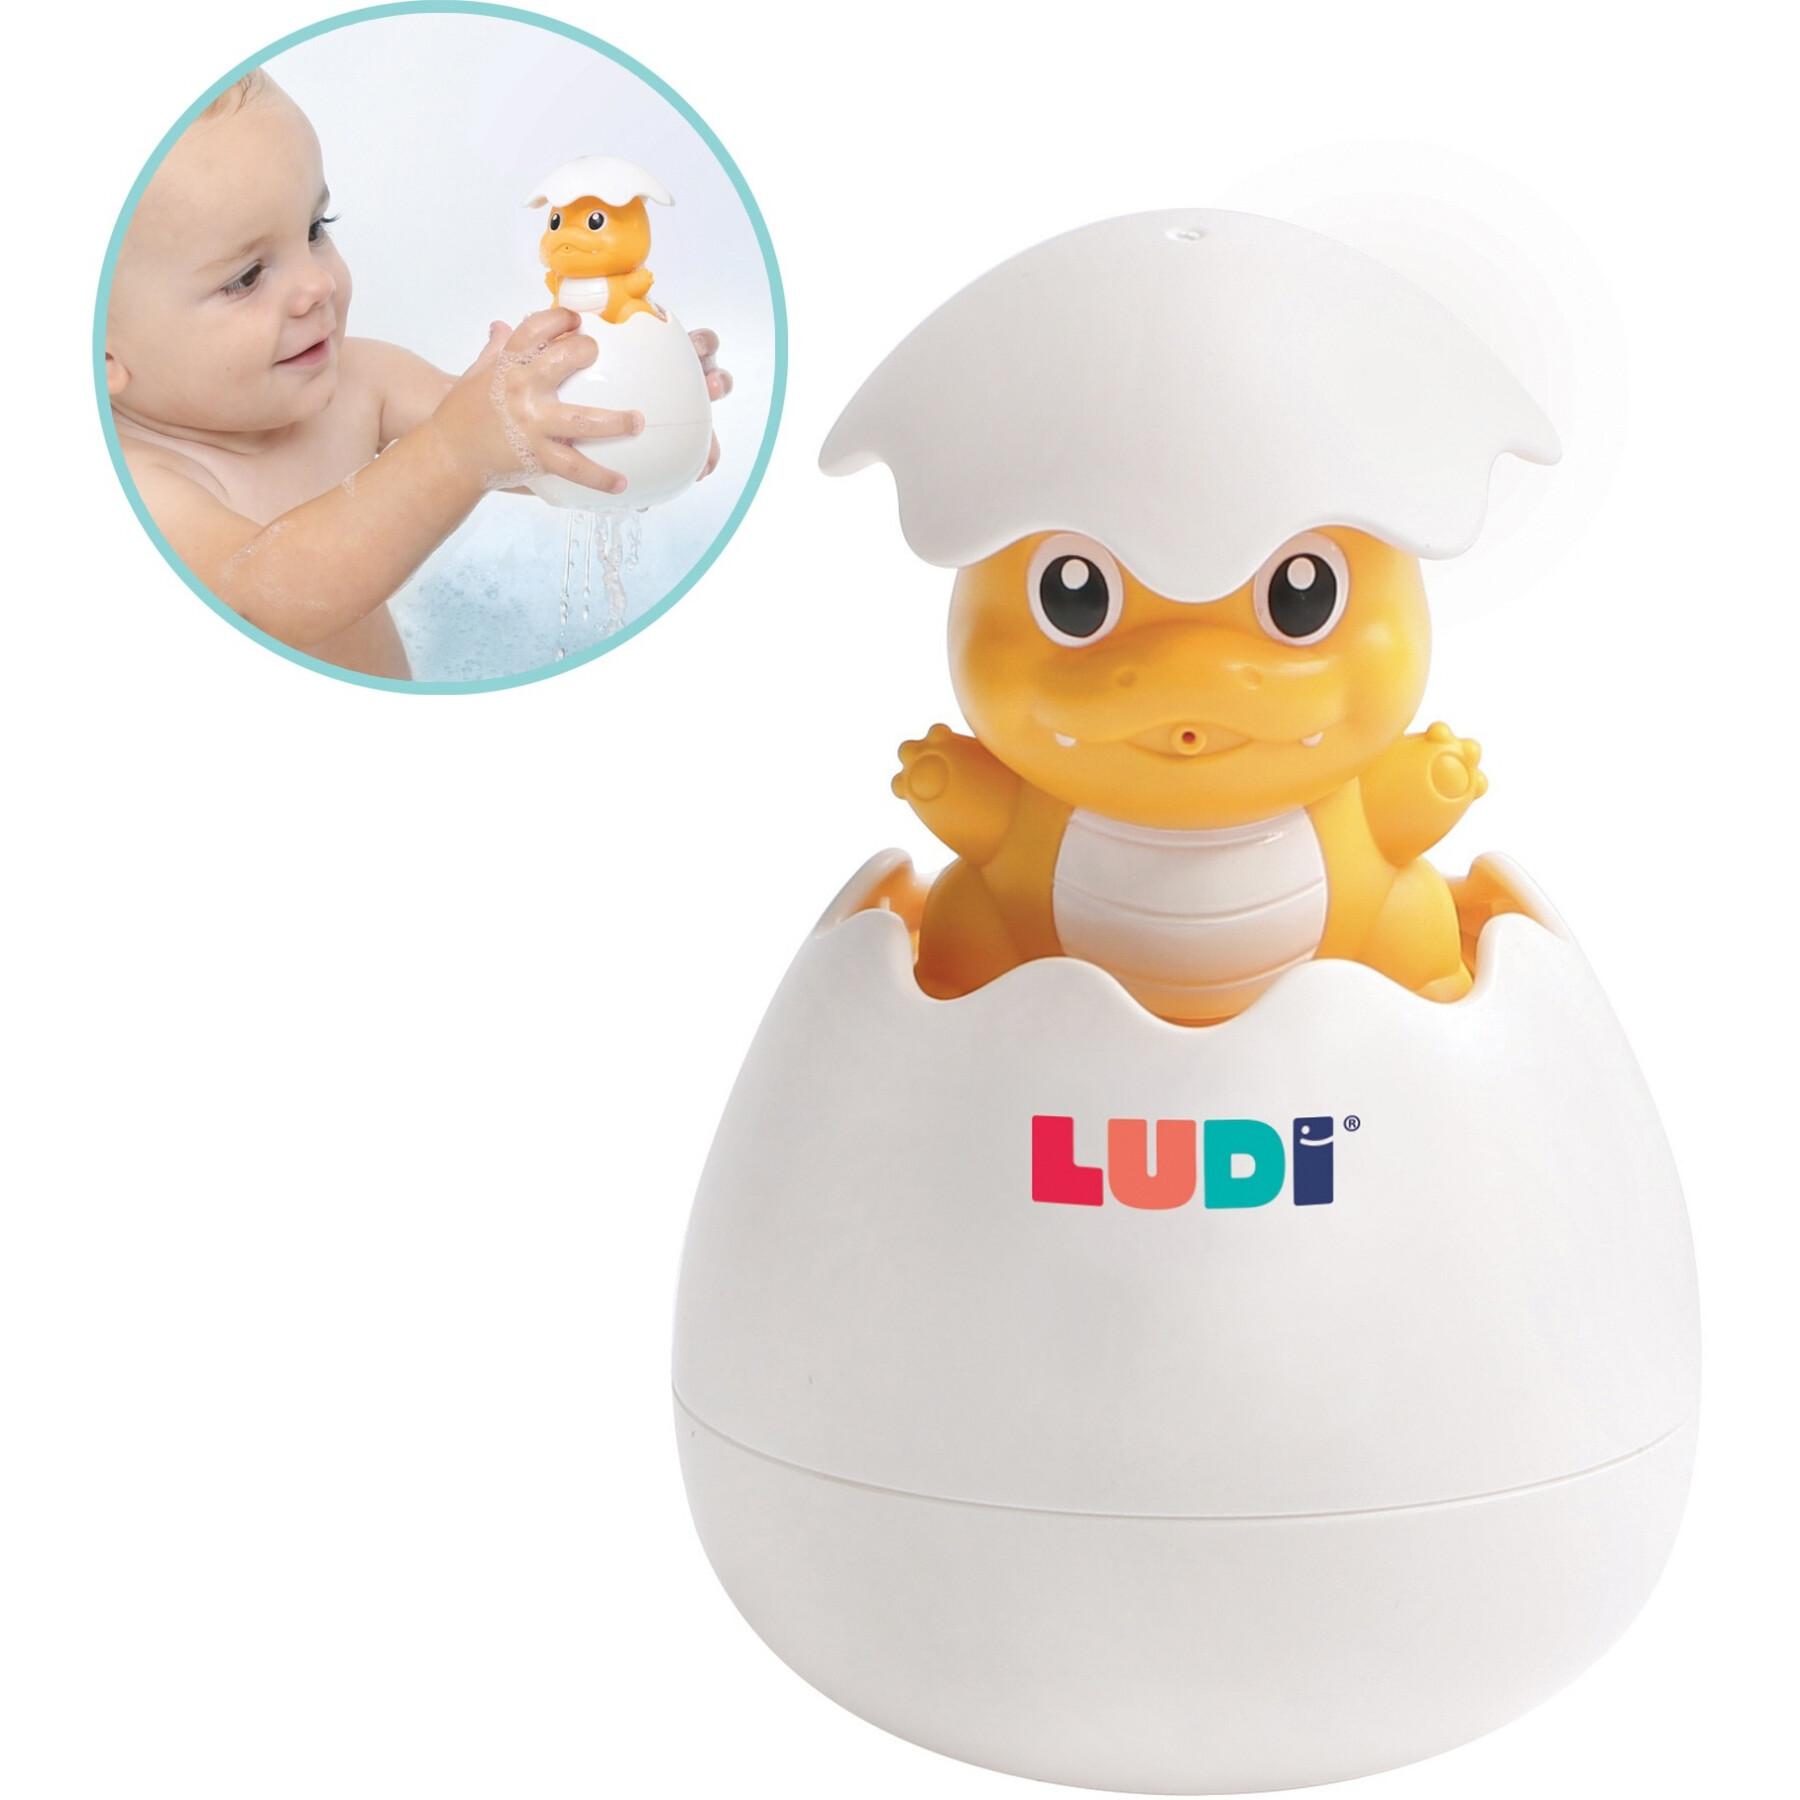 Early-learning games Magic bath egg Jbm Ludi